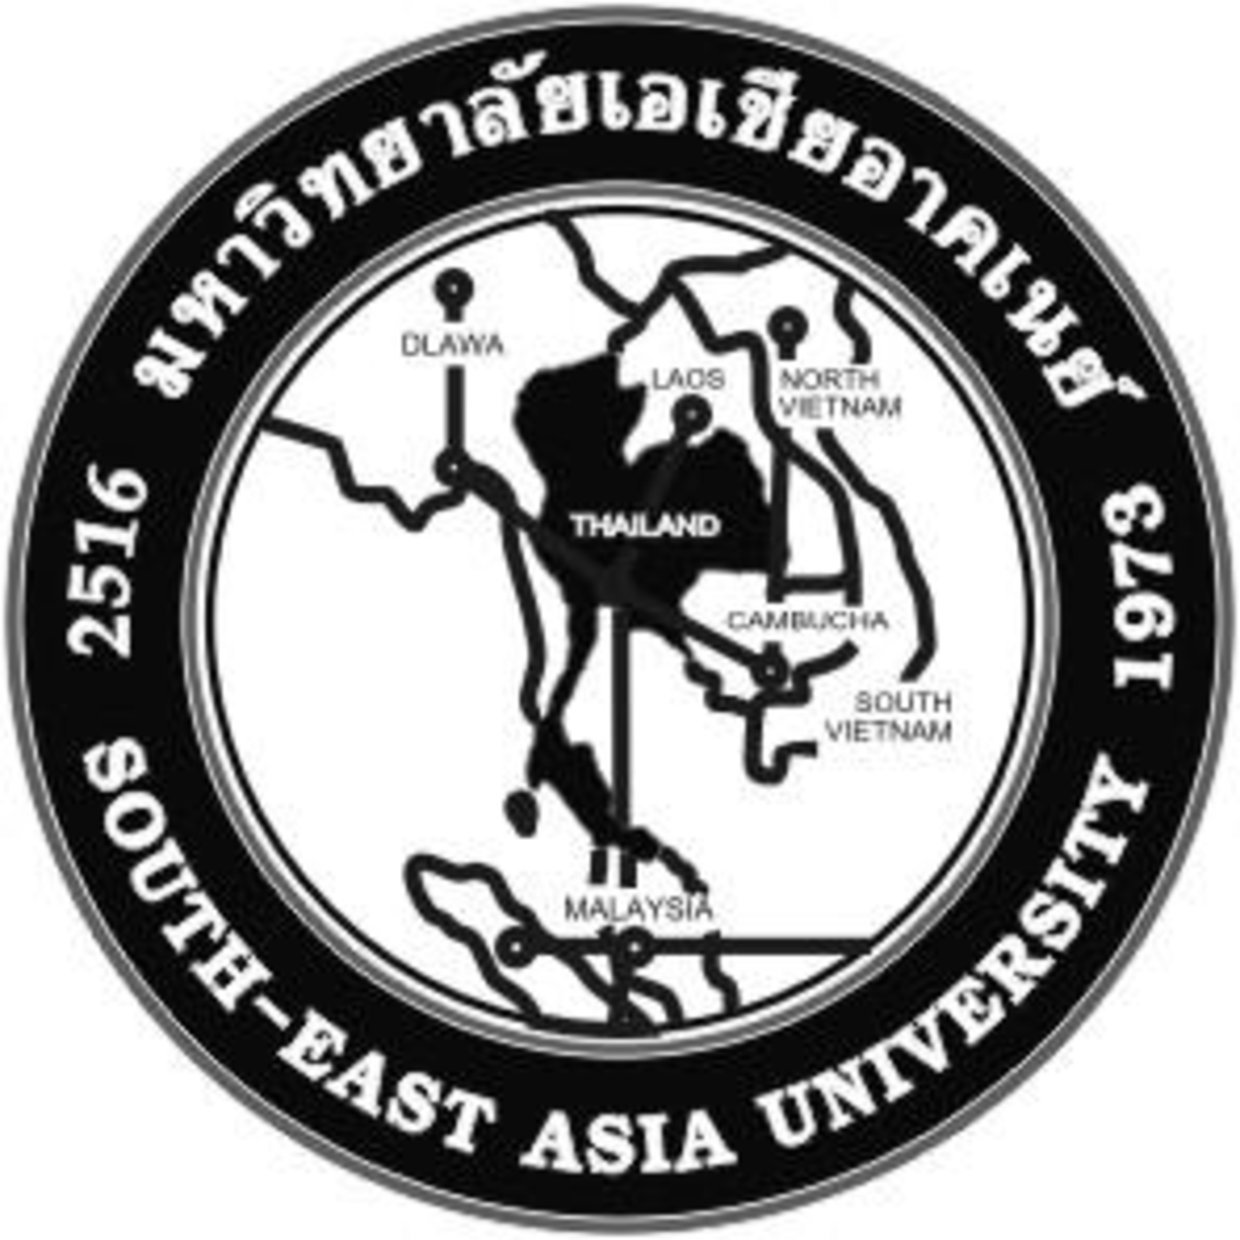 South-East Asia University logo